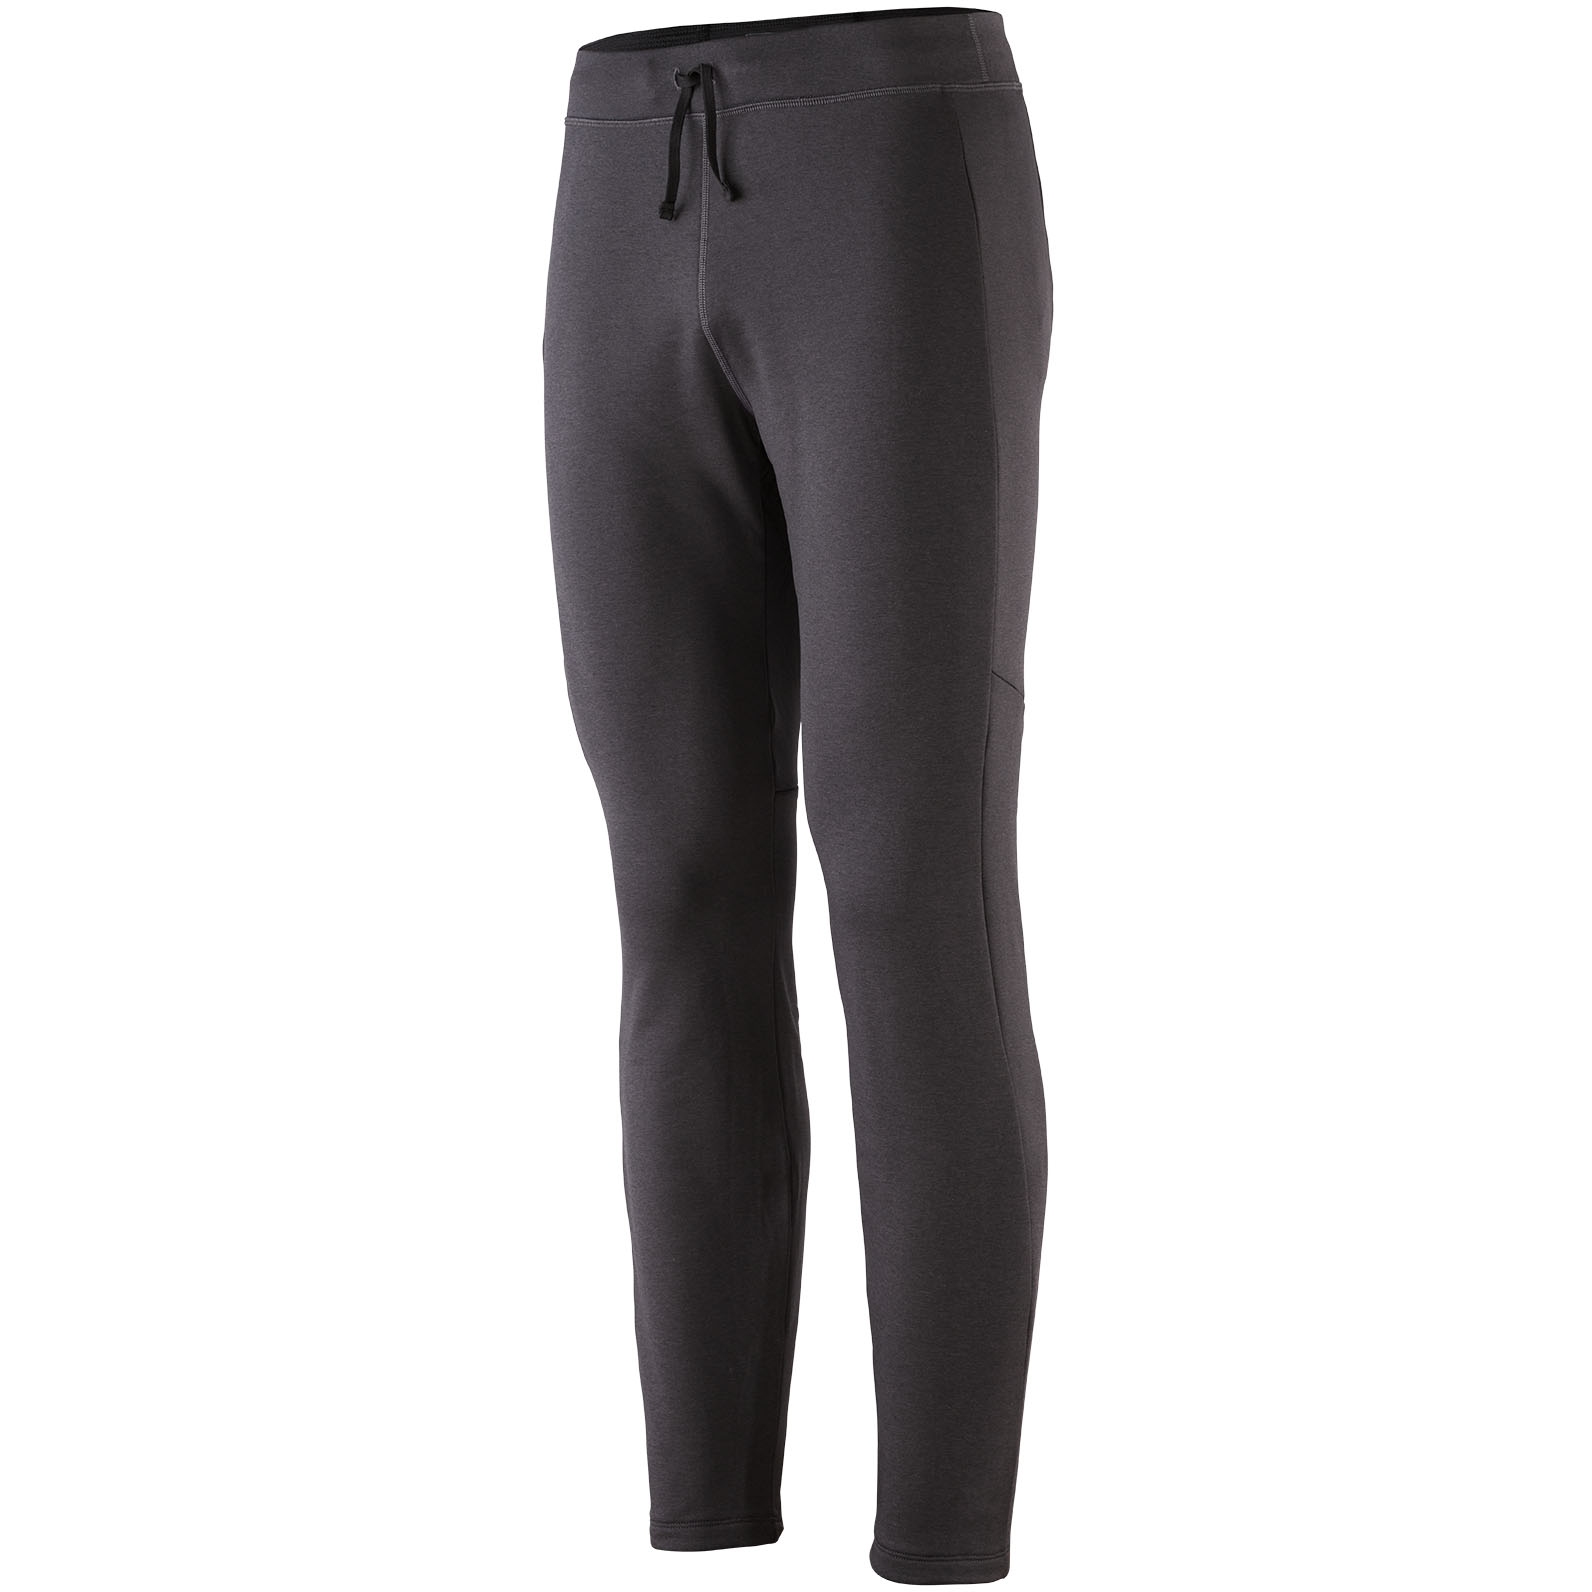 Patagonia Black Active Pants Size M - 48% off